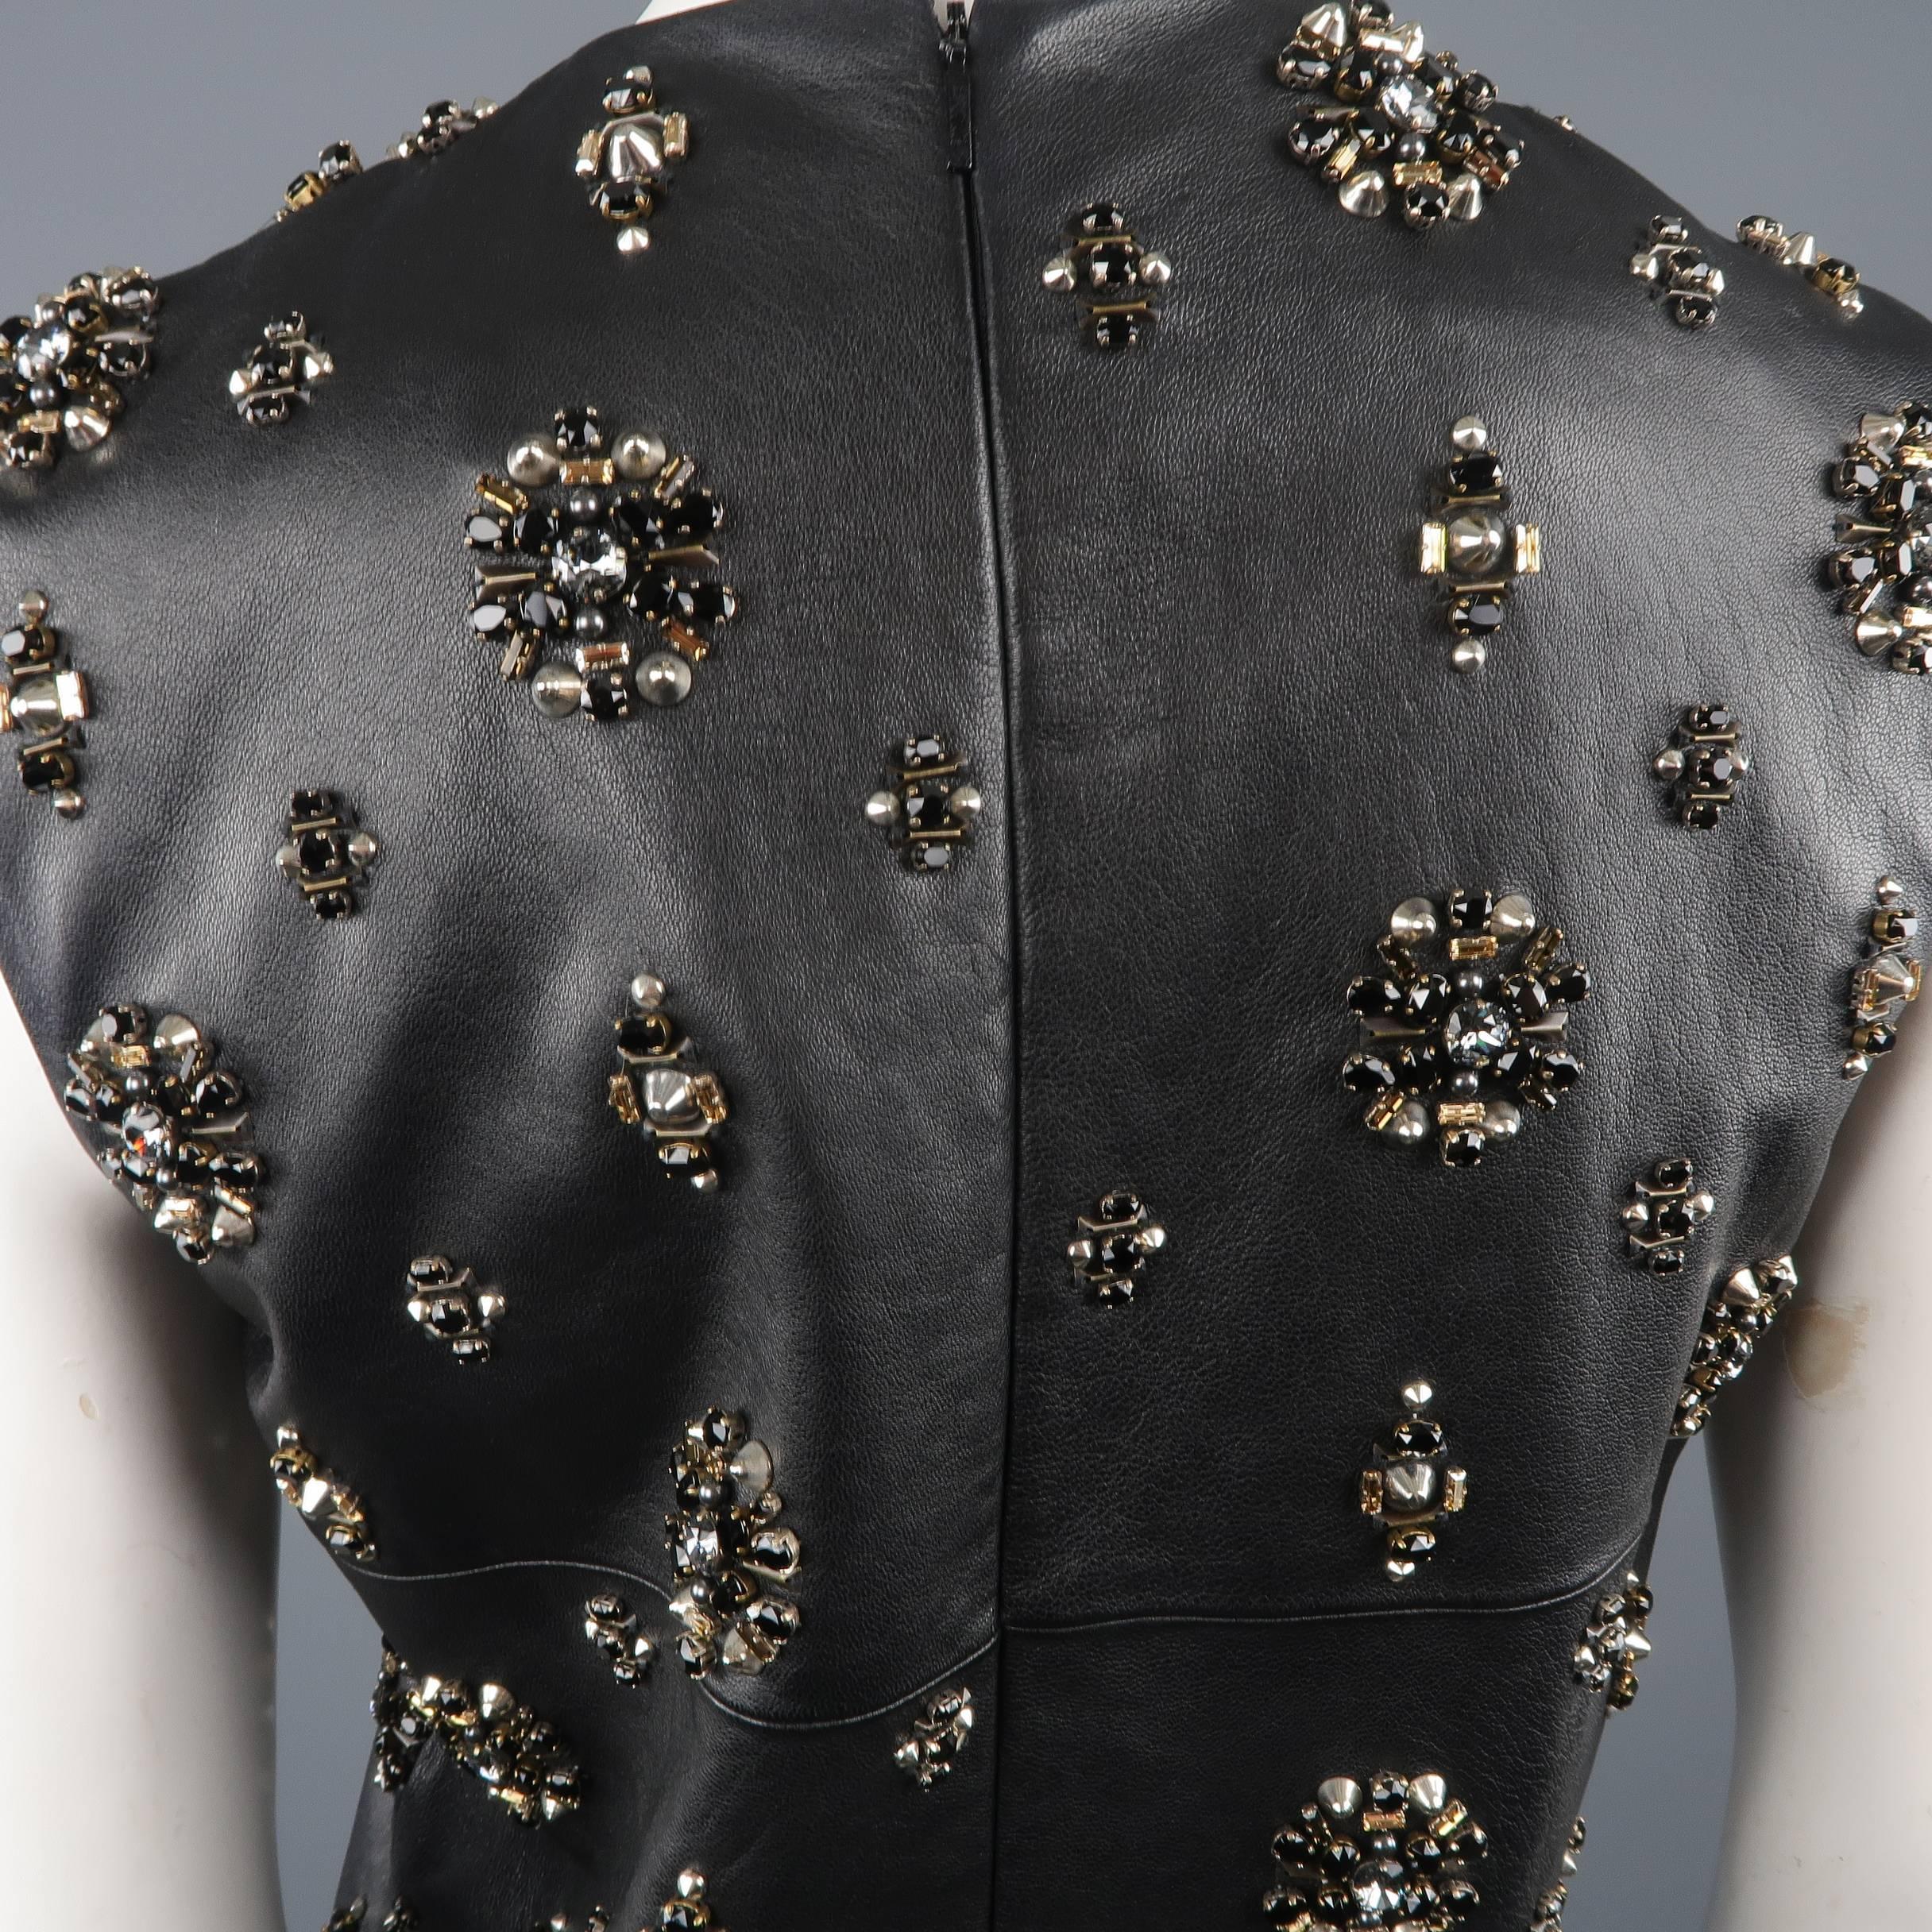 Saint Laurent by Hedi Slimane Embellished Leather Runway Dress, Fall 2013 1